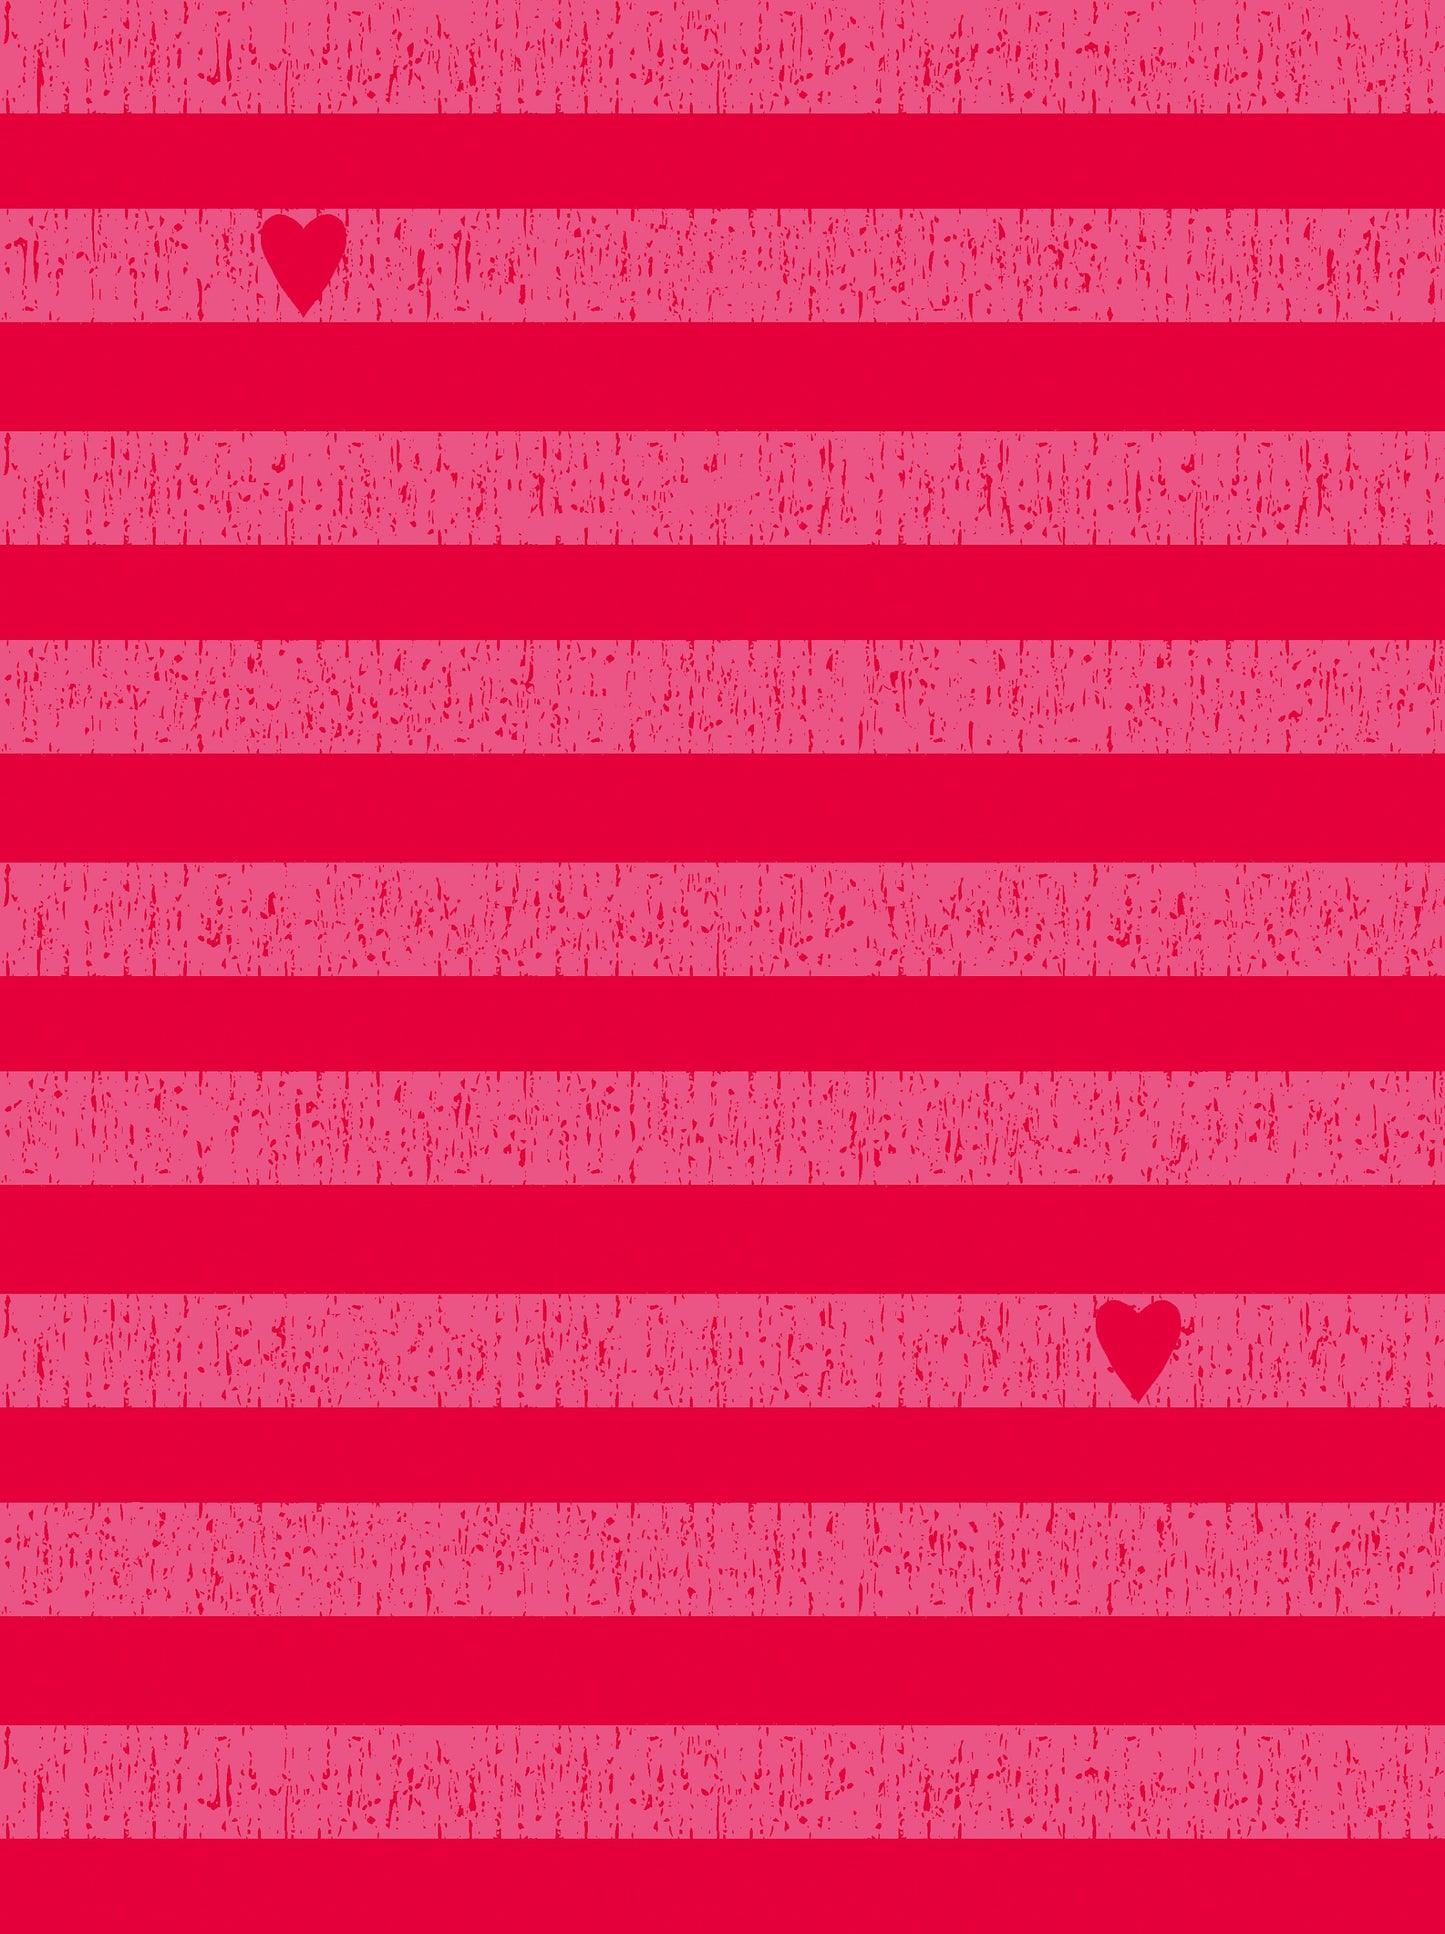 Avalana Knits Pink / Red Heart Stripe 19-142 Cotton/Spandex Knit